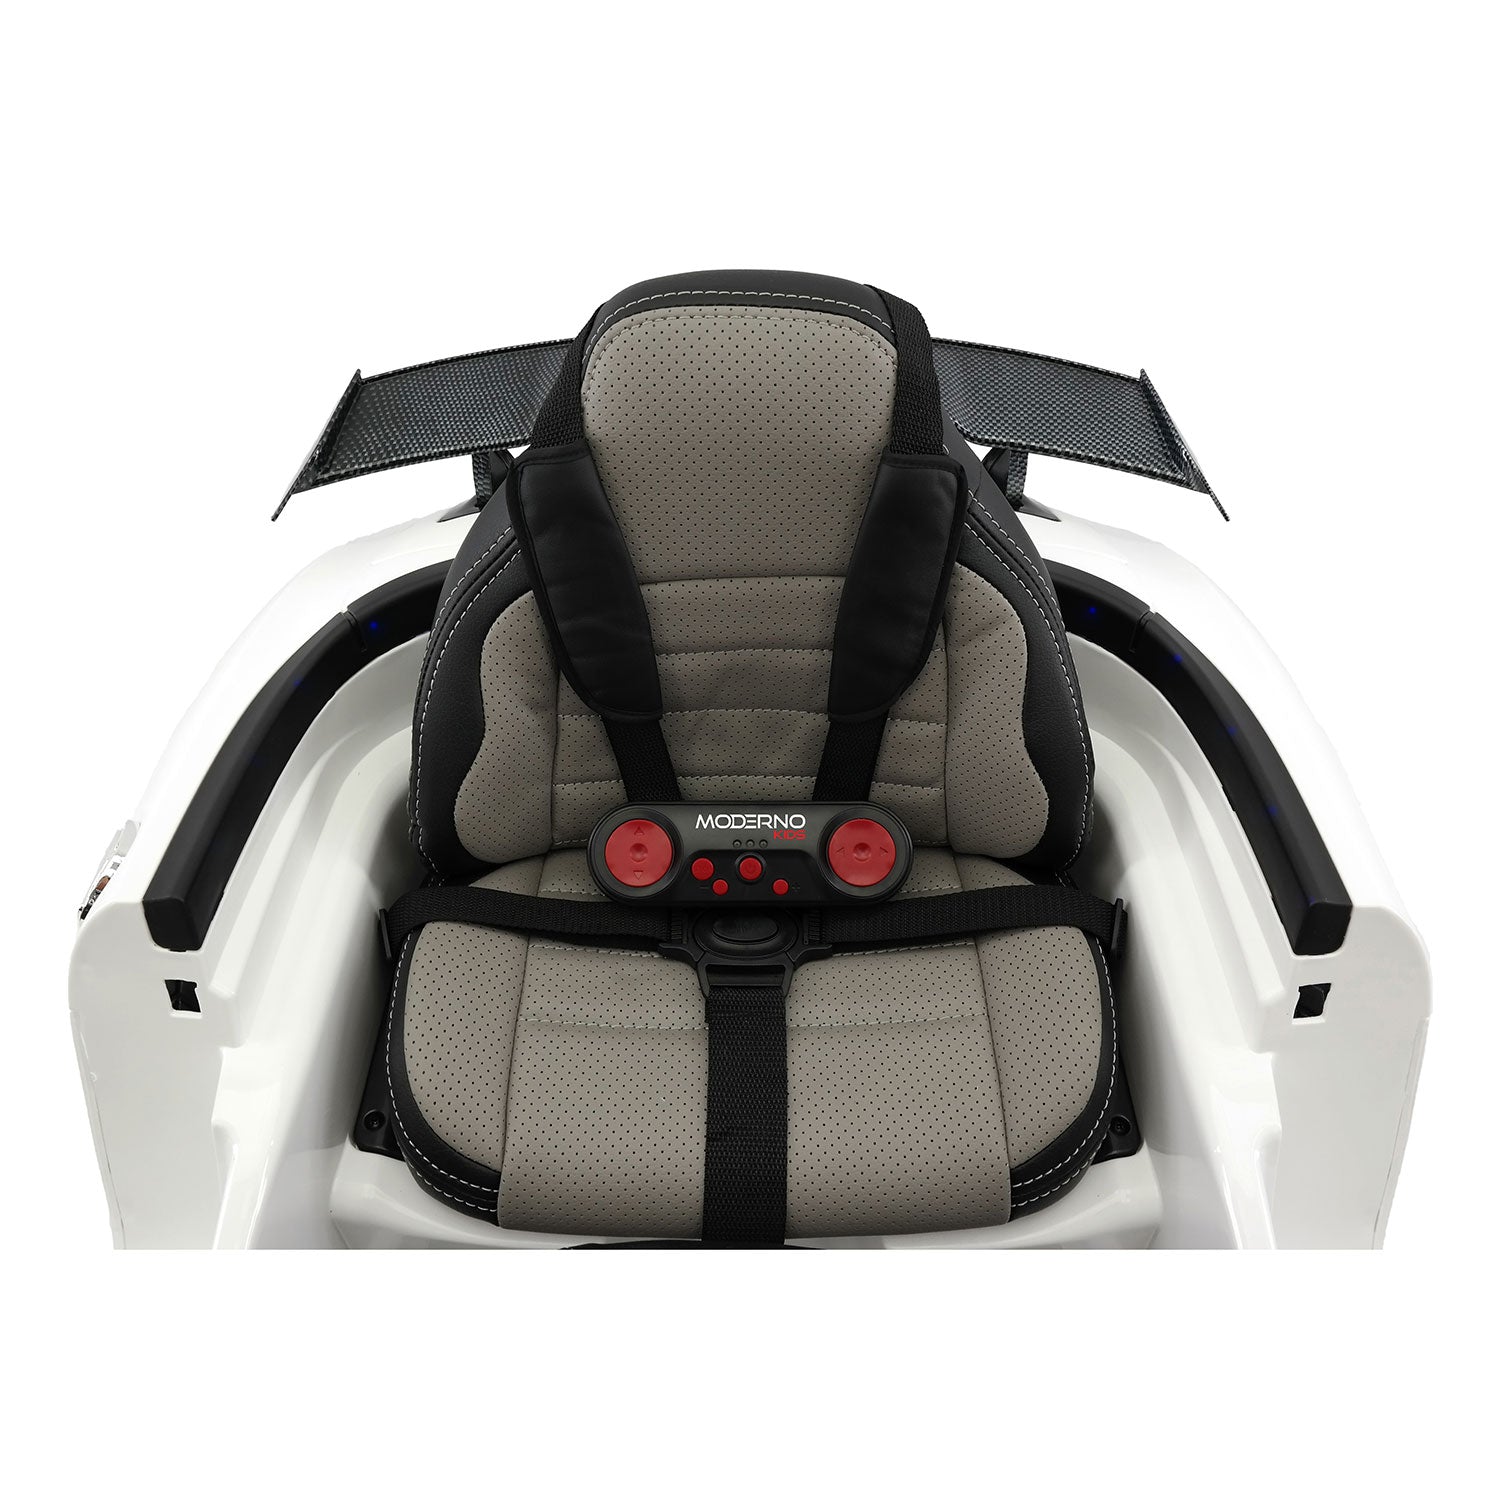 Mercedes Sls Amg Final Edition 12v Kids Ride-on Car With Parental Remote | White